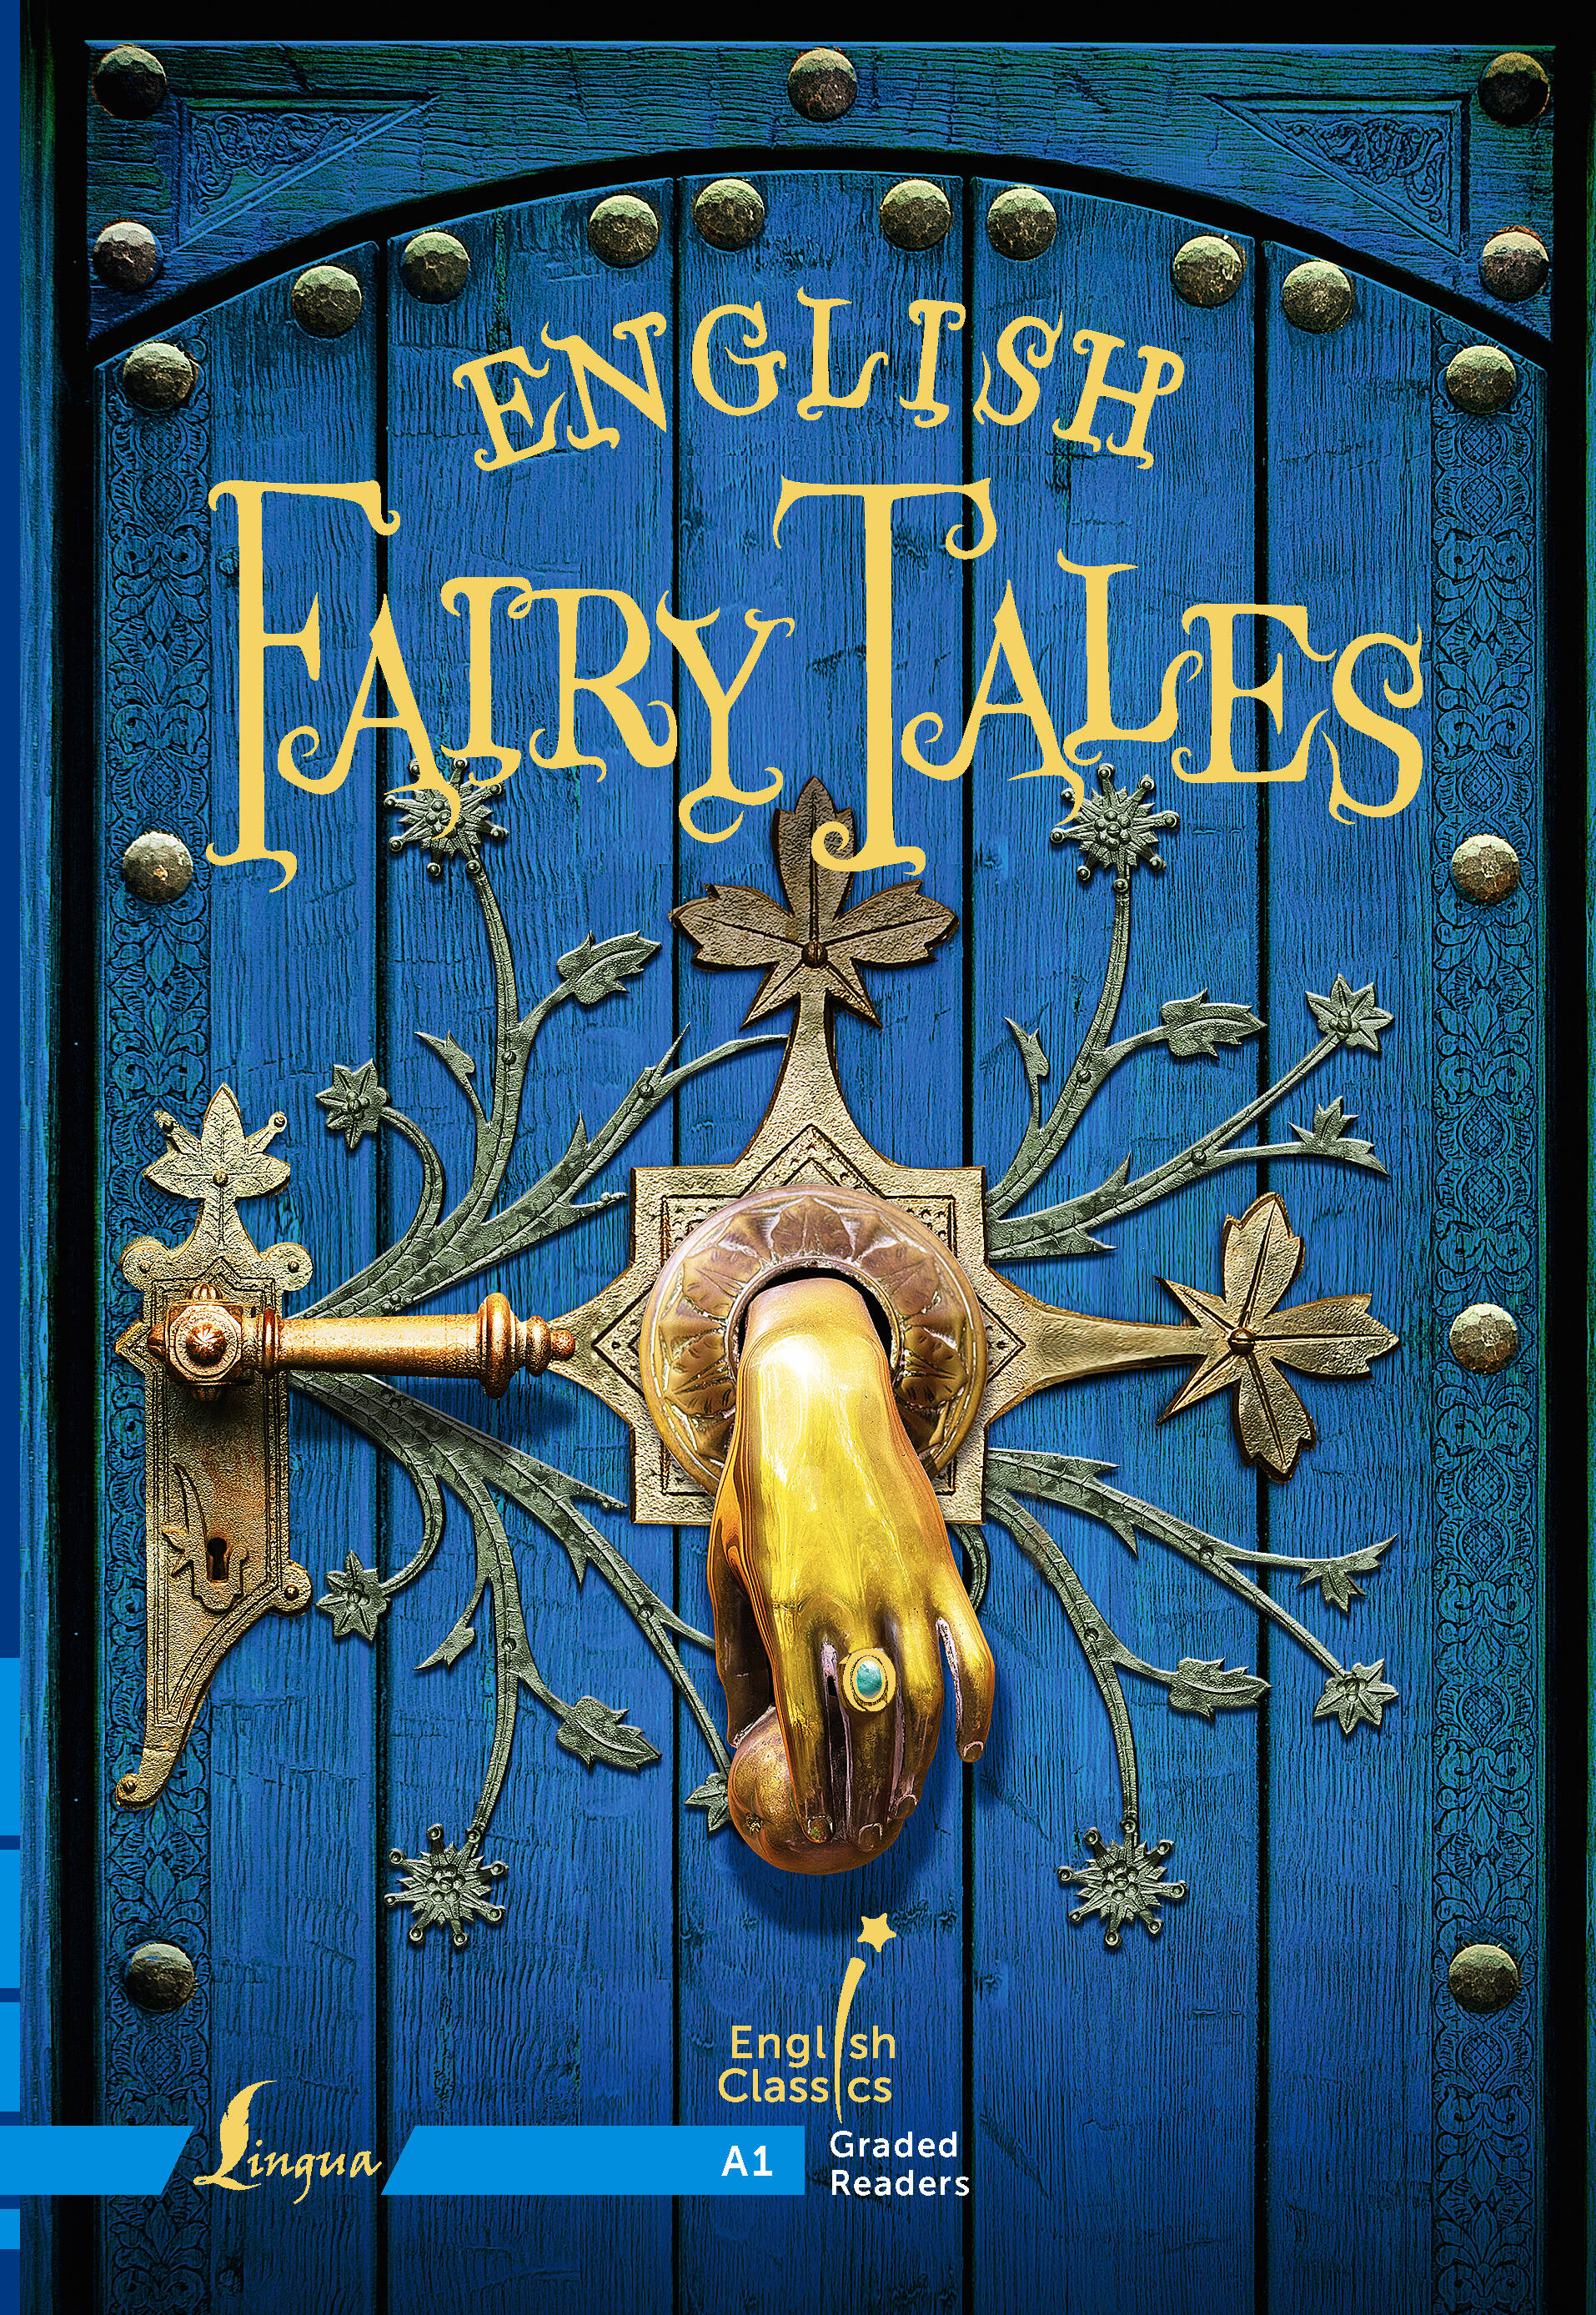 jacobs joseph english fairy tales English Fairy Tales. A1